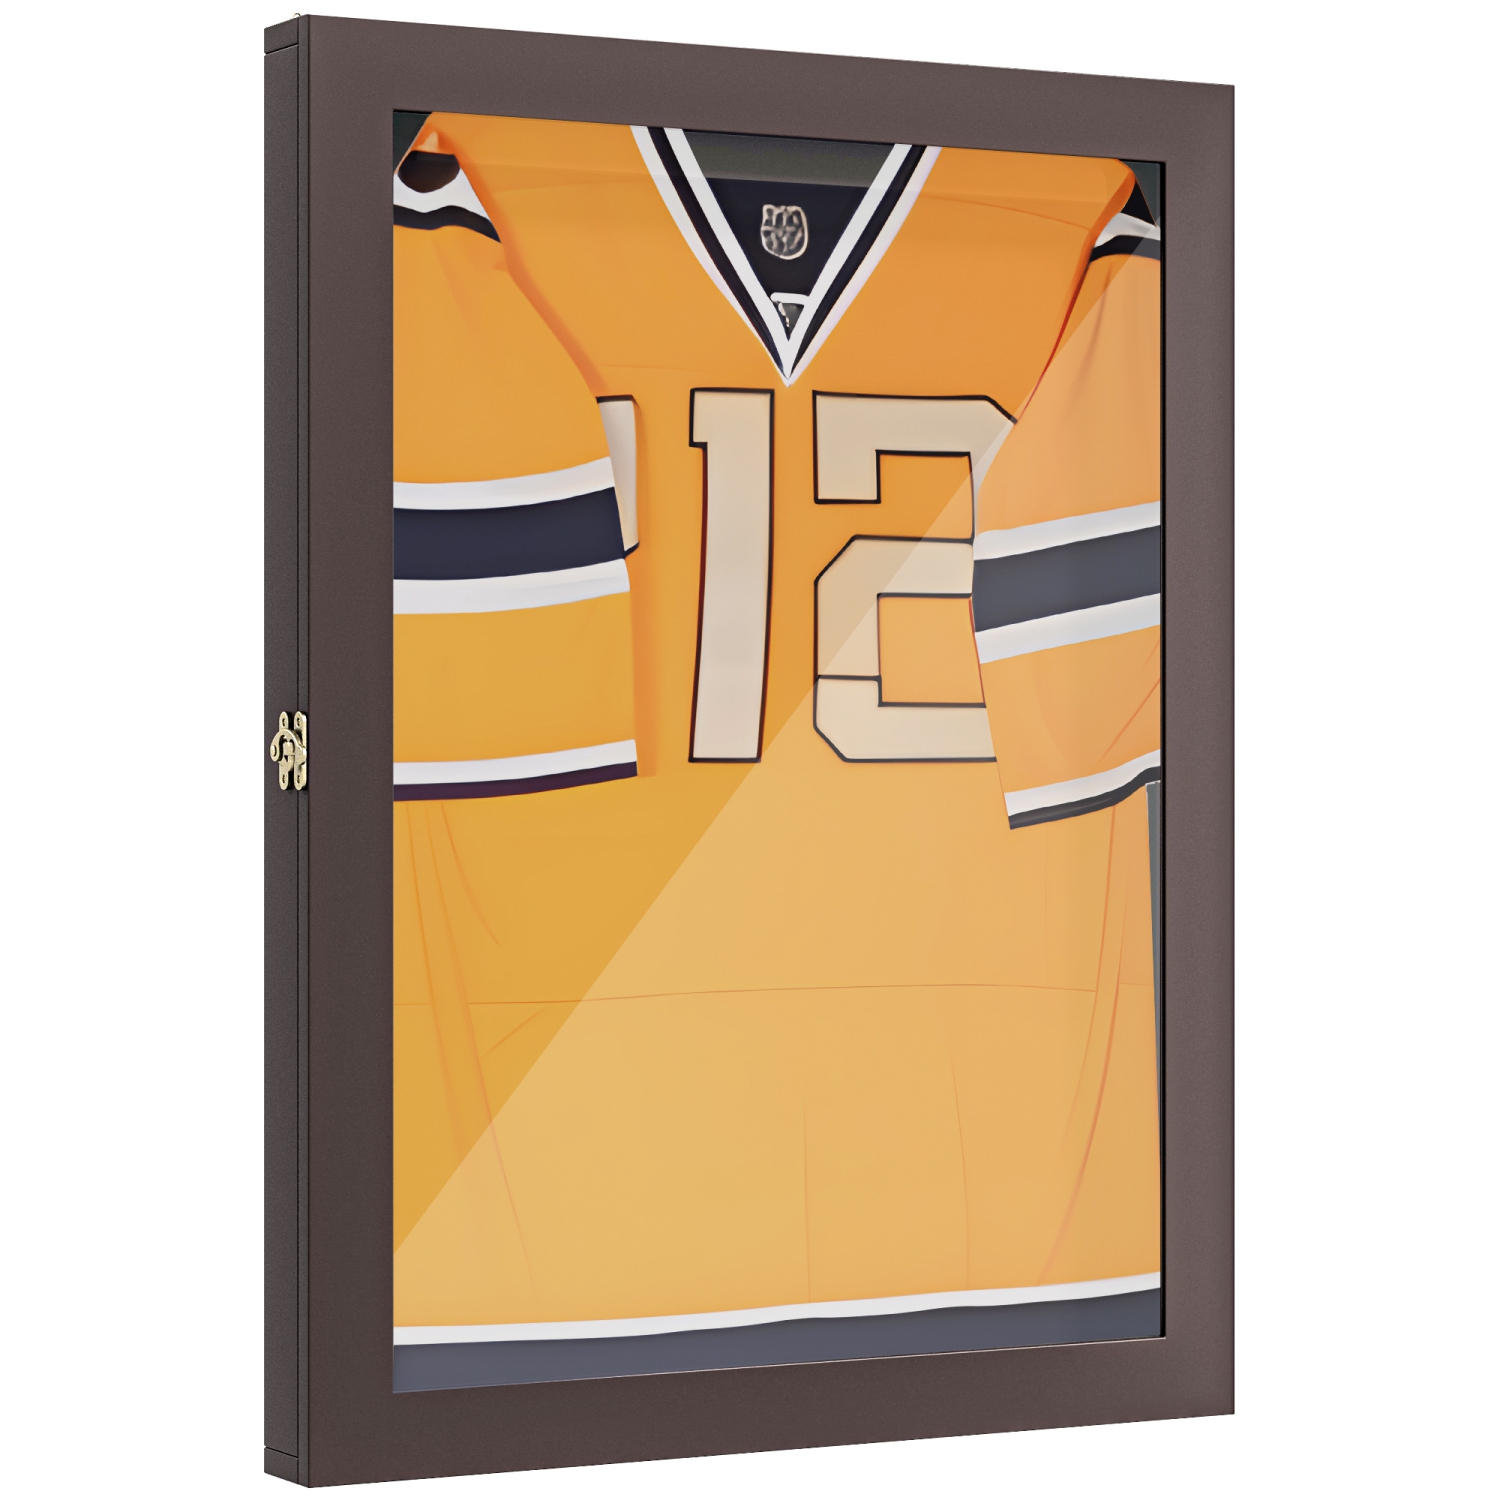 HOMCOM Jersey Display Frame Case, Acrylic Sports Shirt Shadow Box for Basketball Football Baseball, 24" x 32", Brown